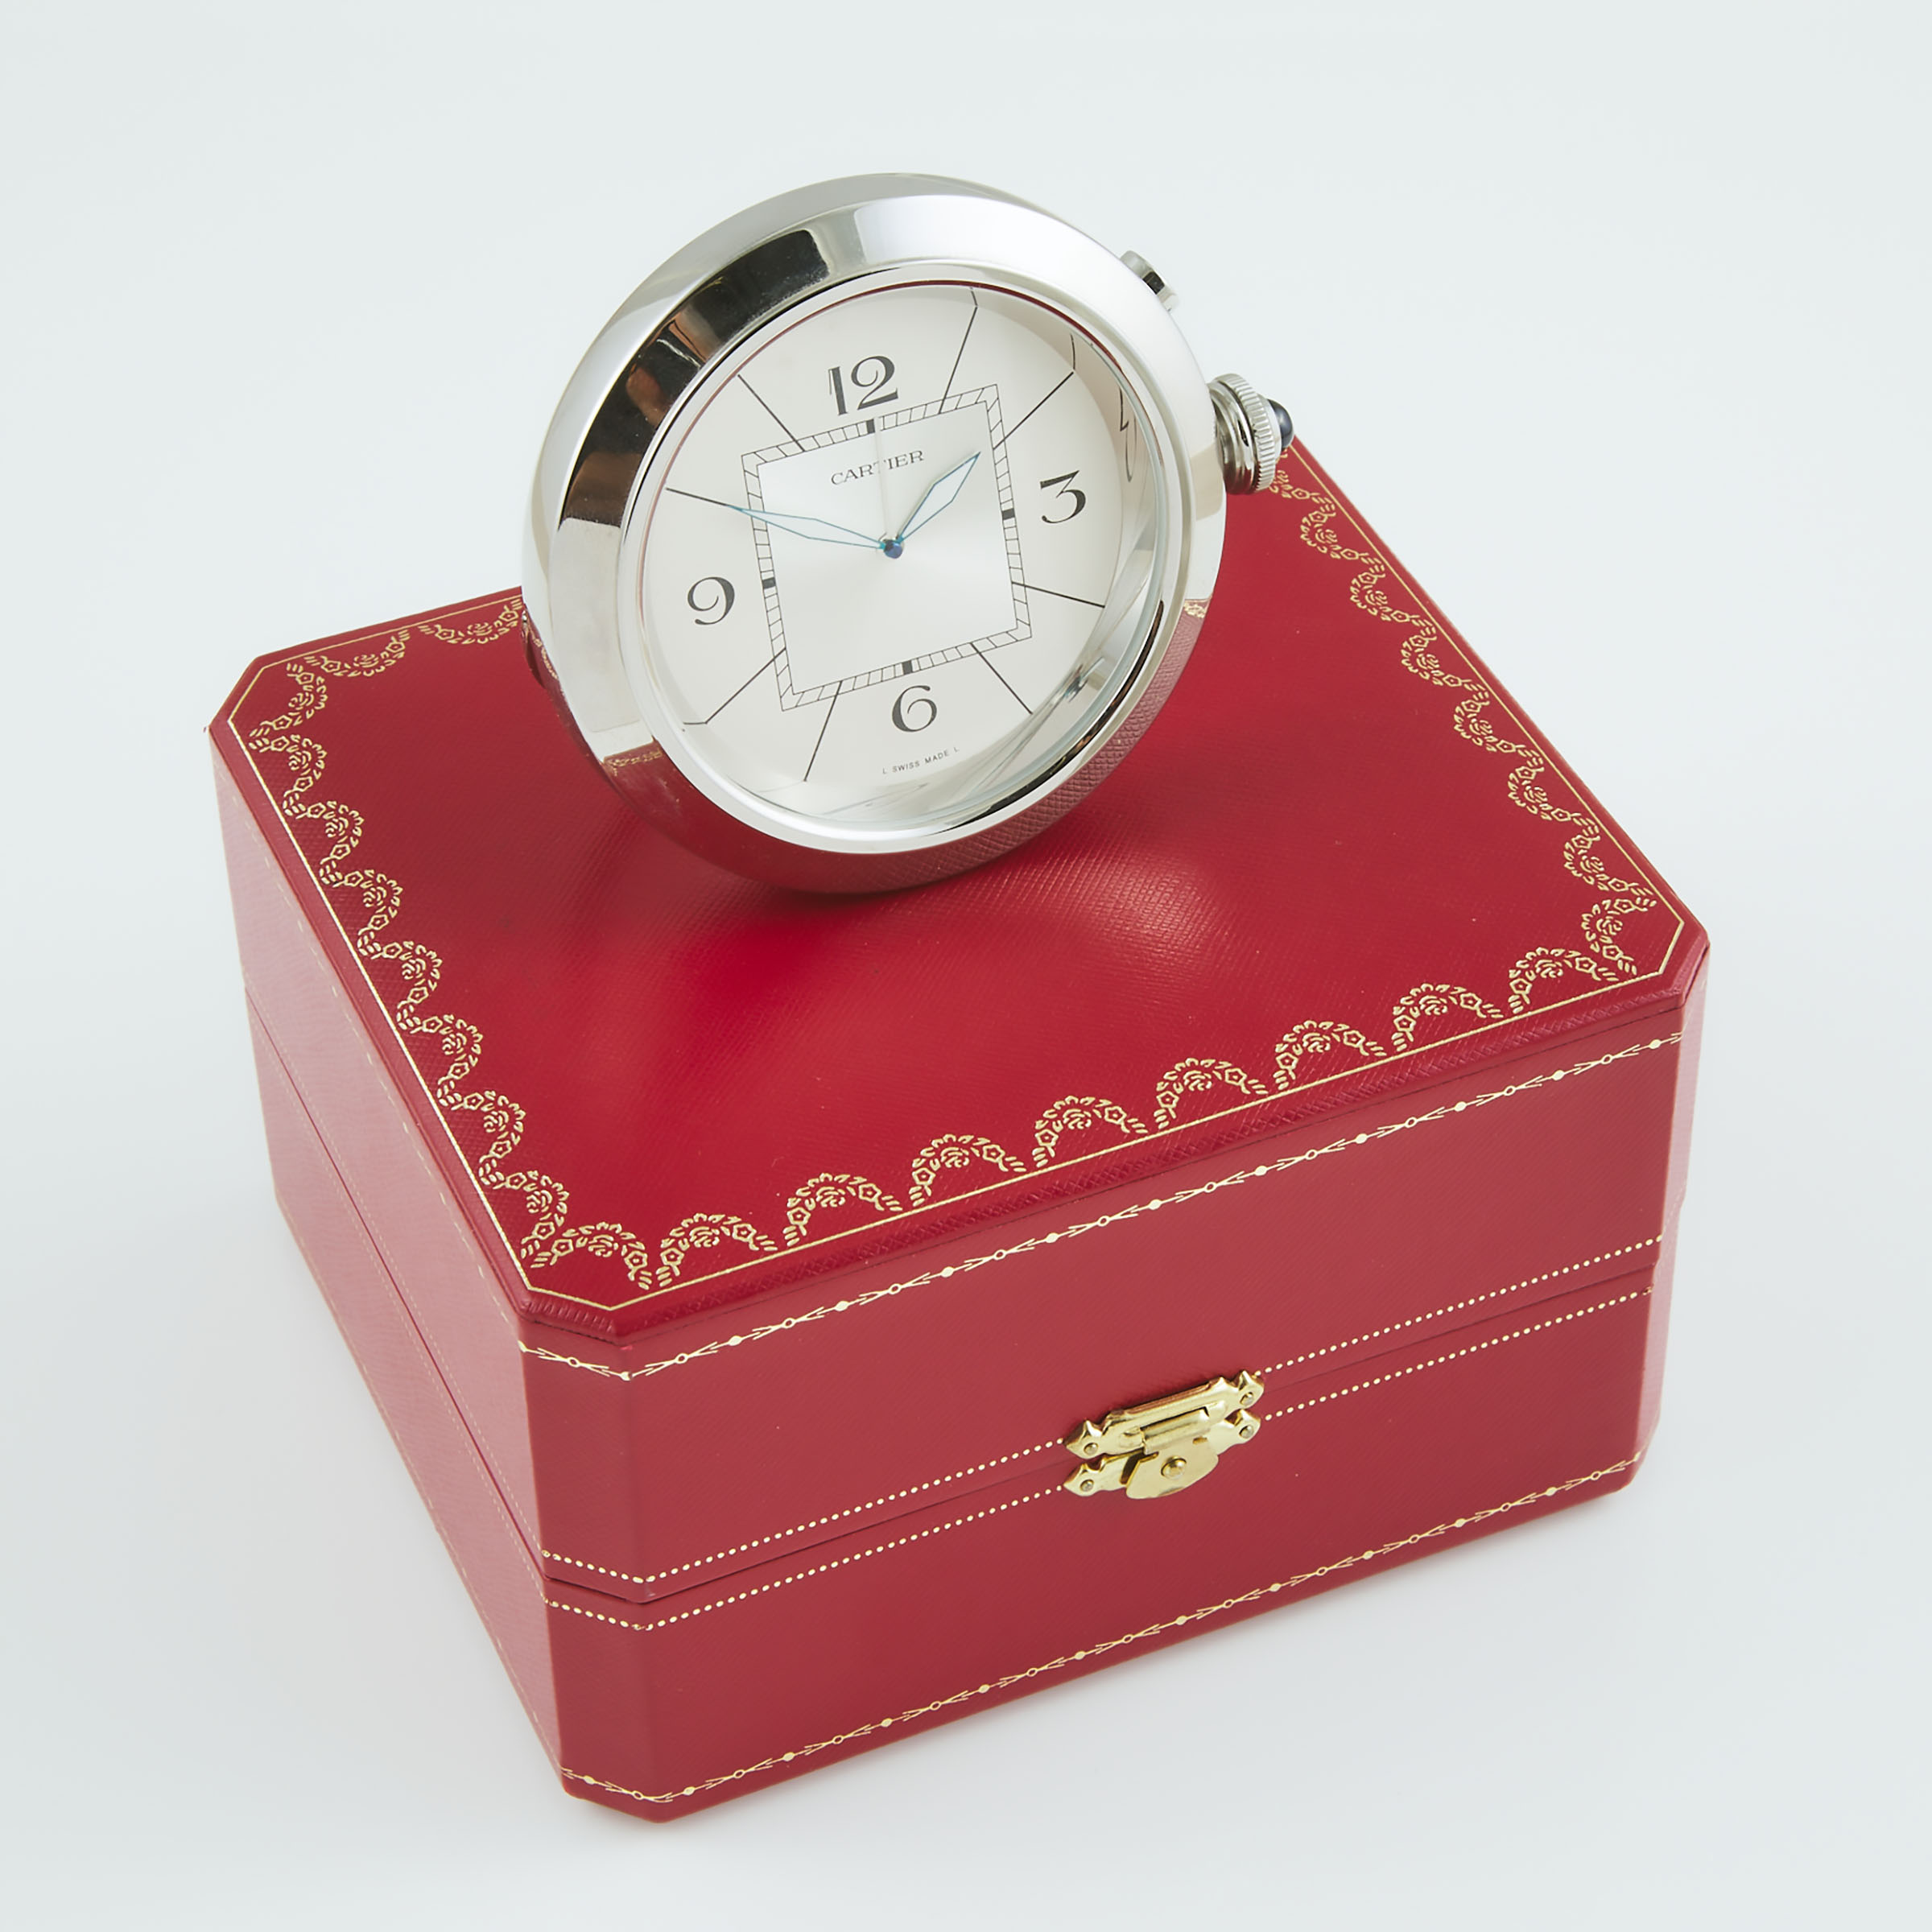 Cartier Travel Alarm Clock 84mm  3ab334